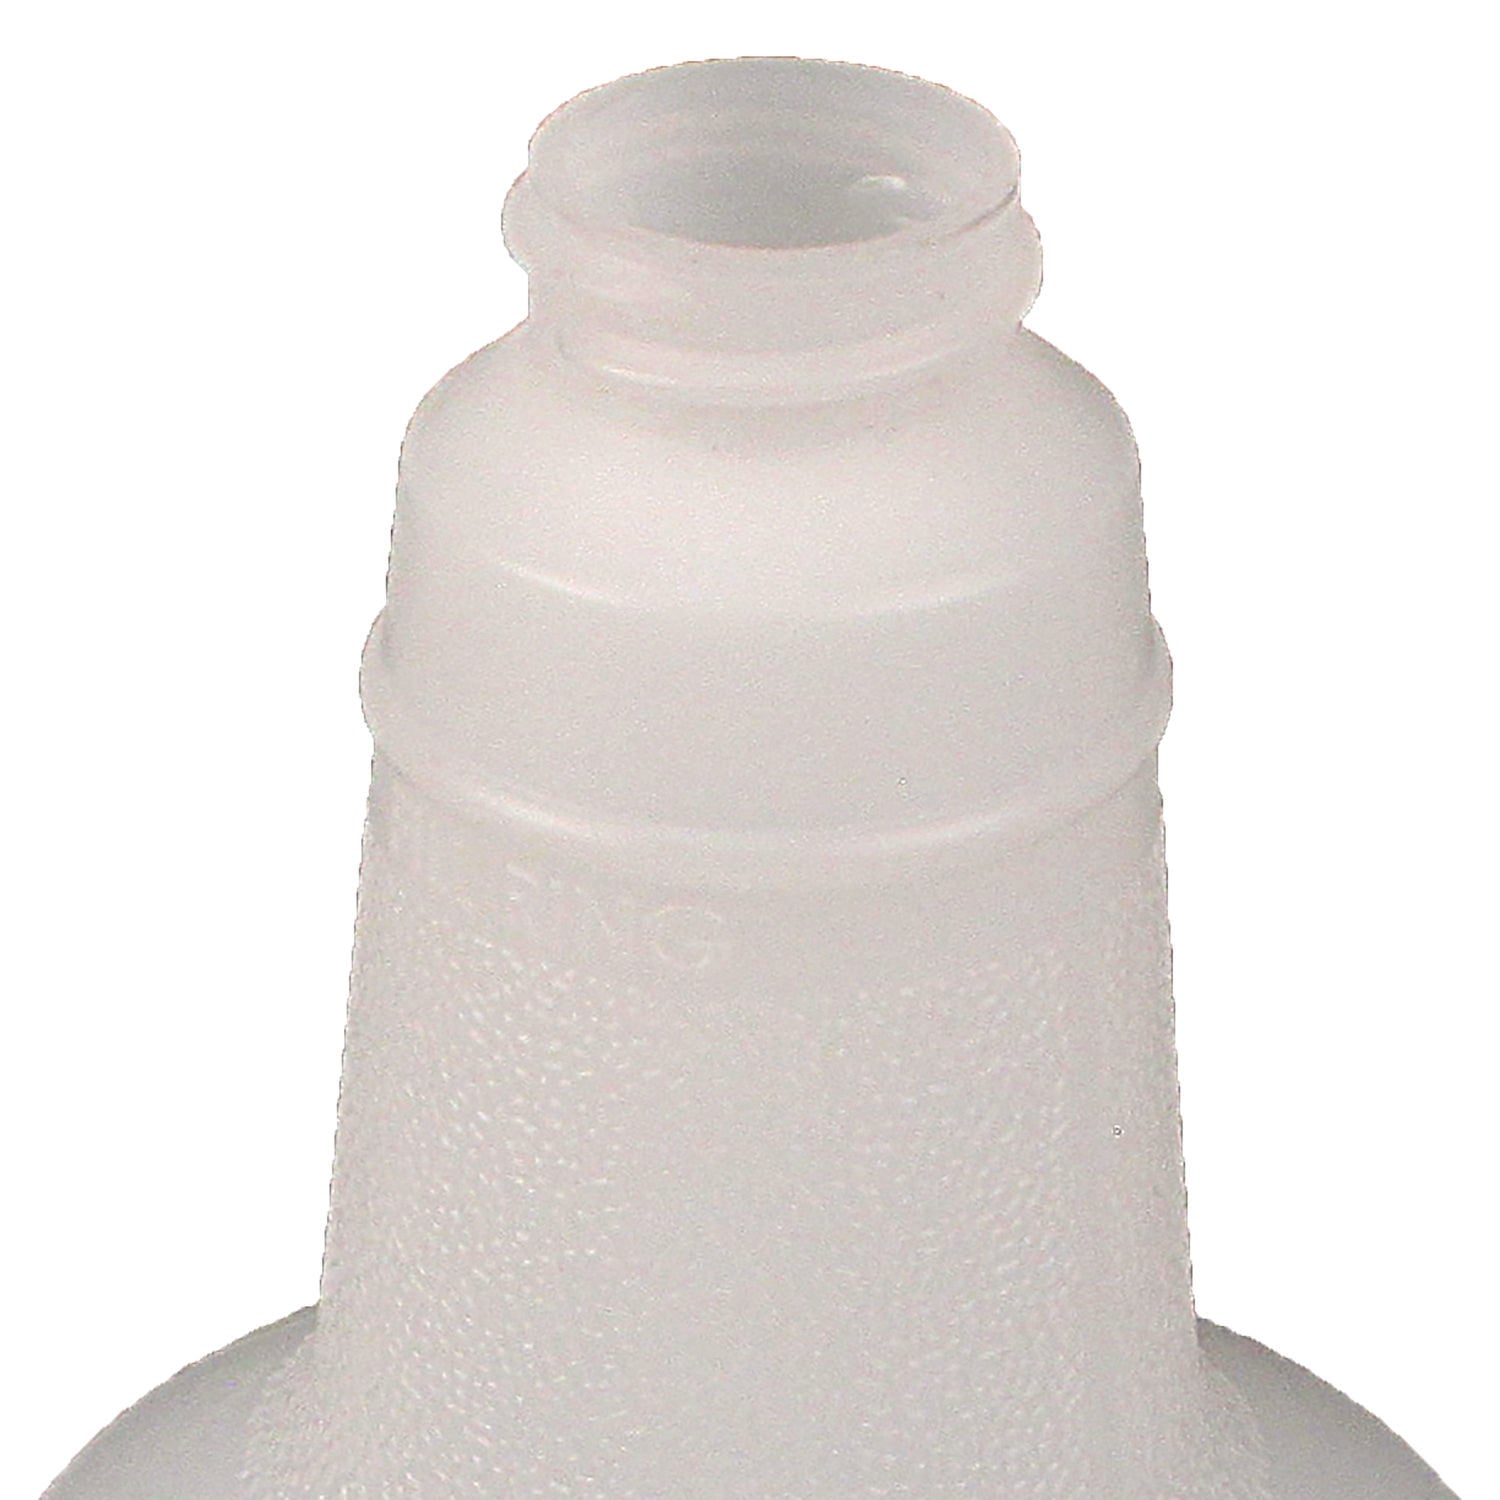 plastic-bottles-with-graduations-24-oz-clear-24-carton_imp5024wg2491 - 4